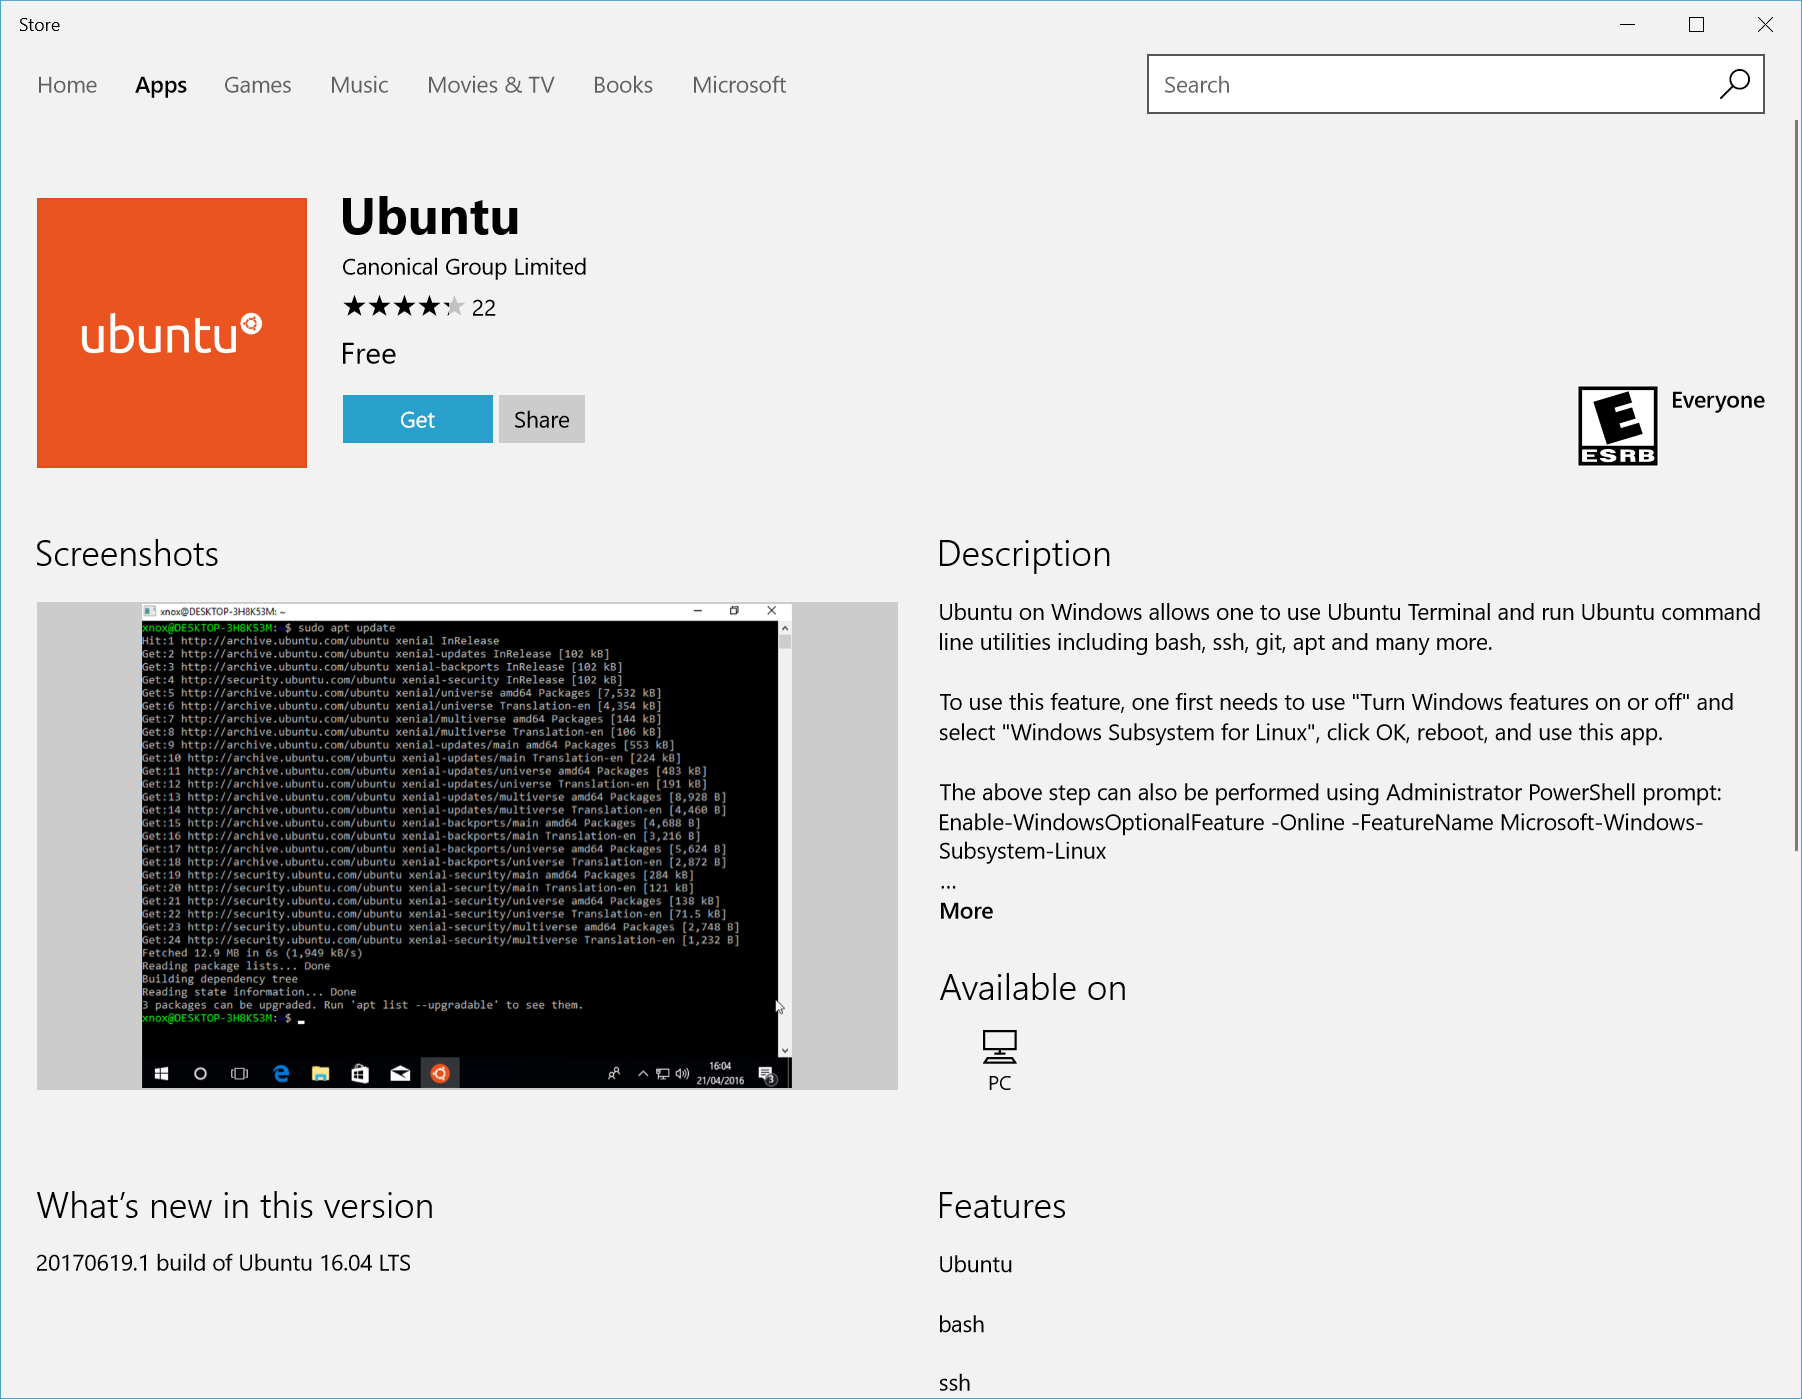 Ubuntu Linux in the Windows Store